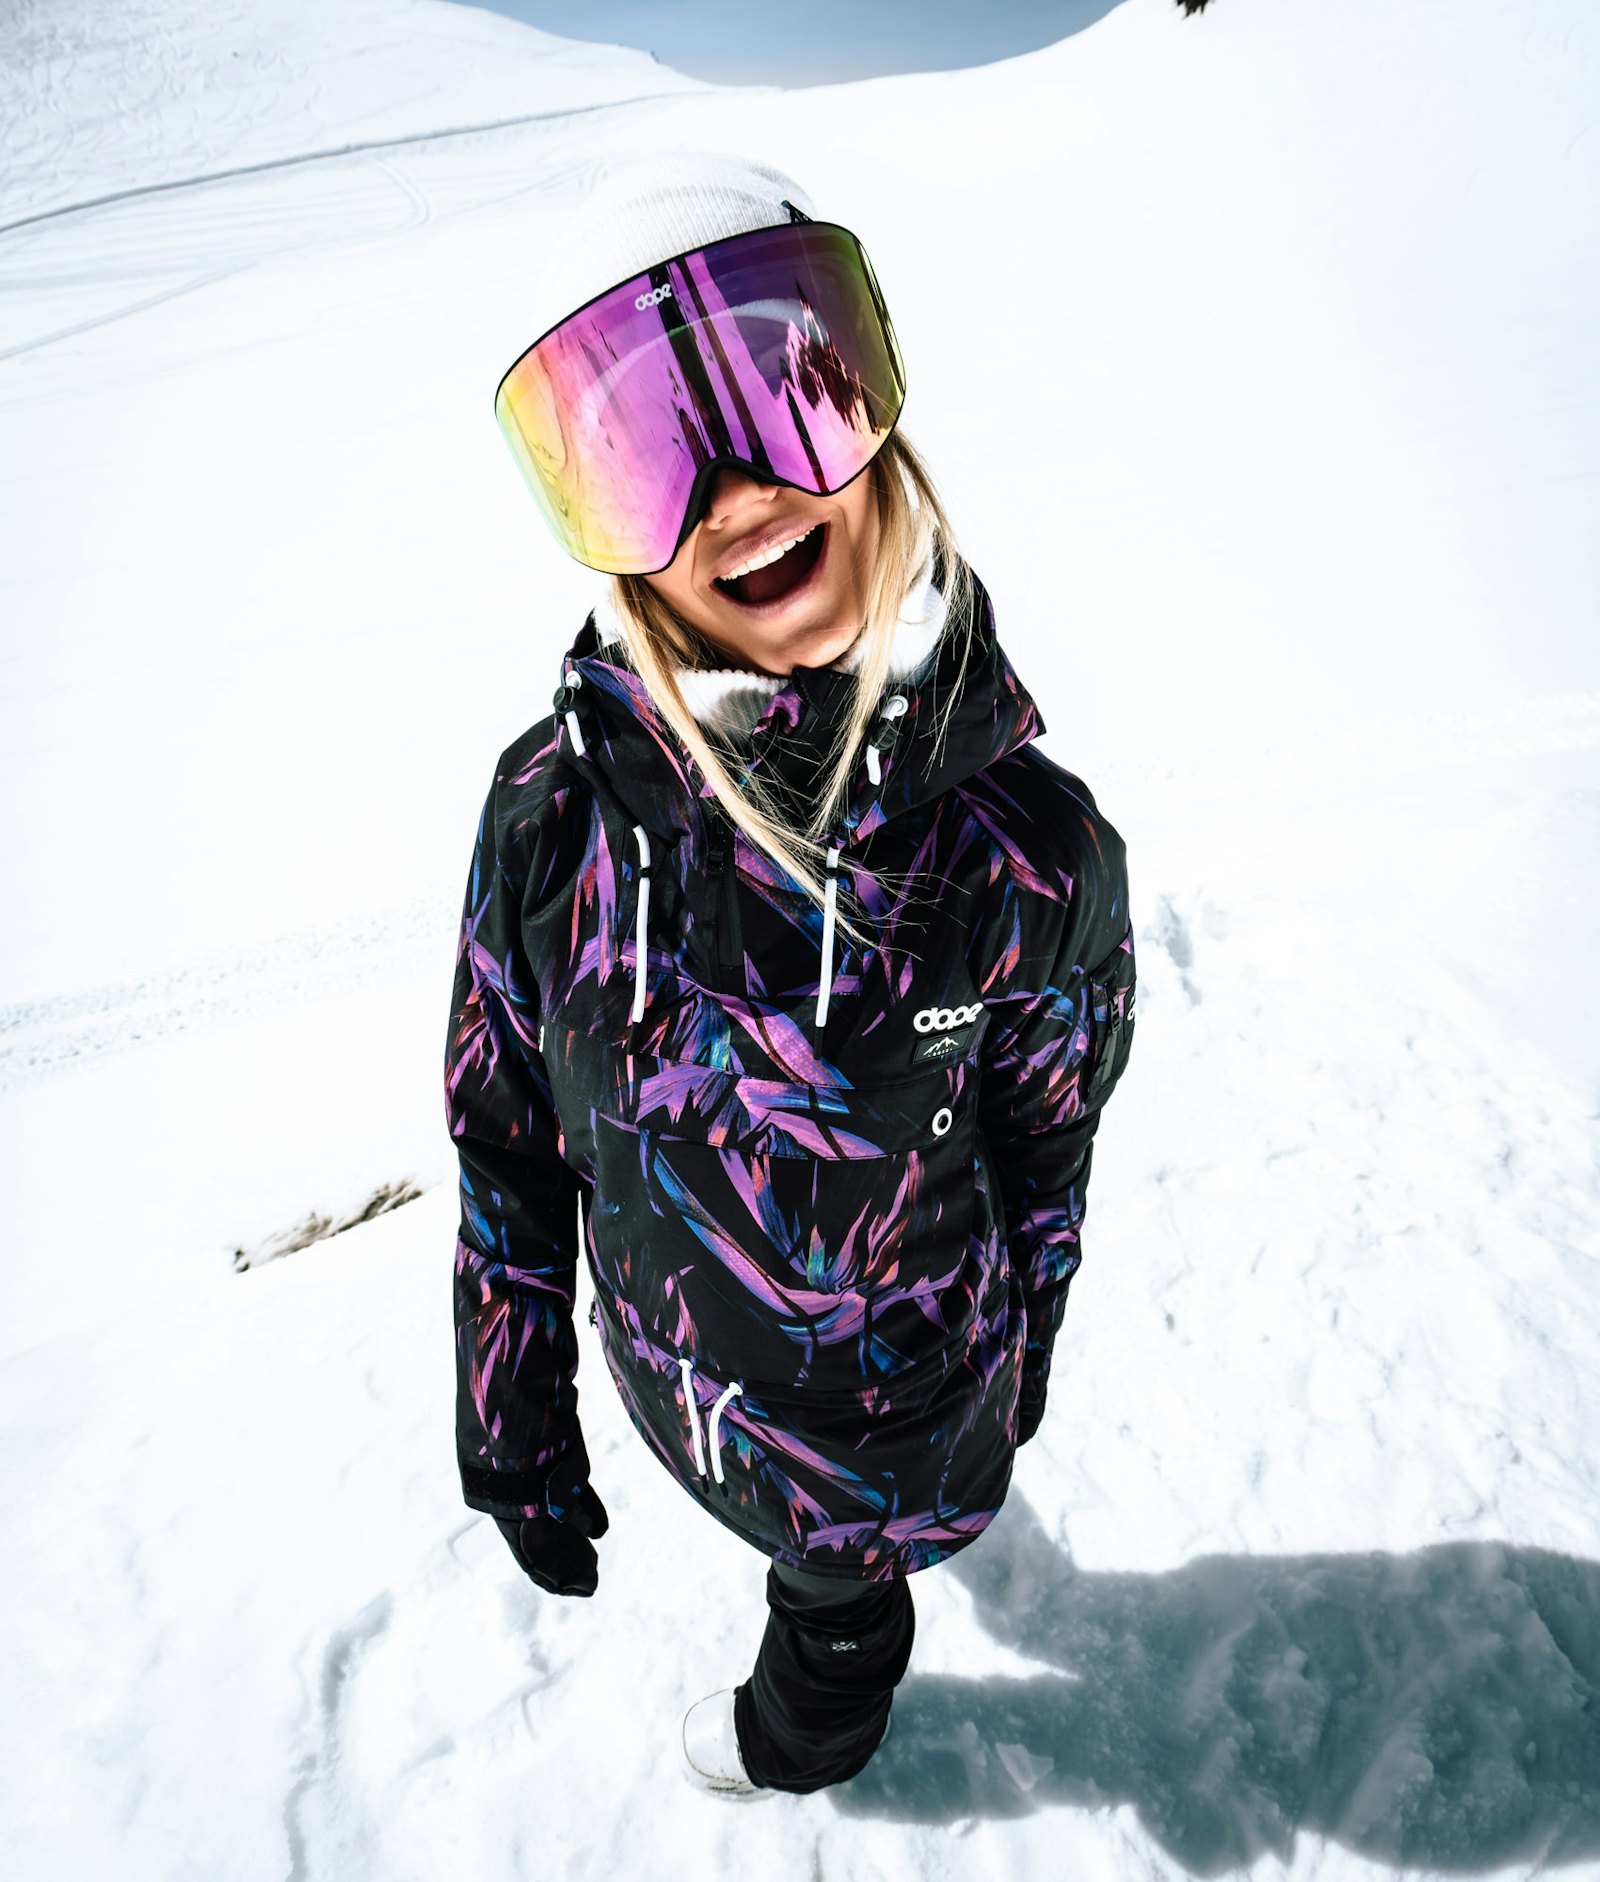 Dope Annok W 2019 Snowboardjacke Damen Purple Foliage